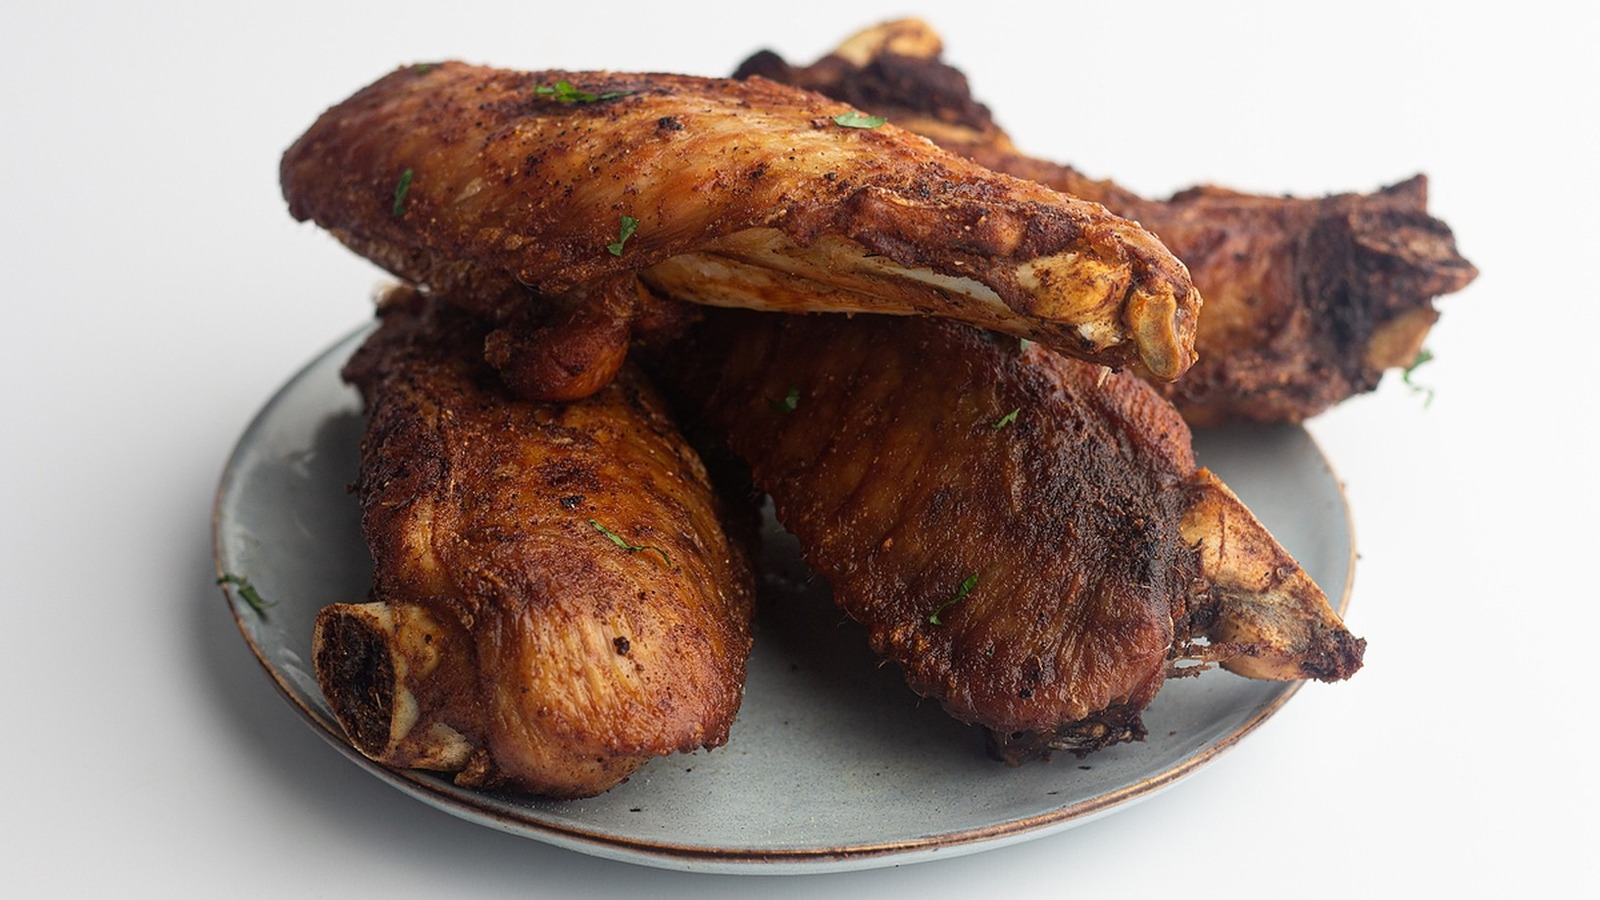 https://www.mashed.com/img/gallery/cajun-fried-turkey-wings-recipe/l-intro-1628000942.jpg